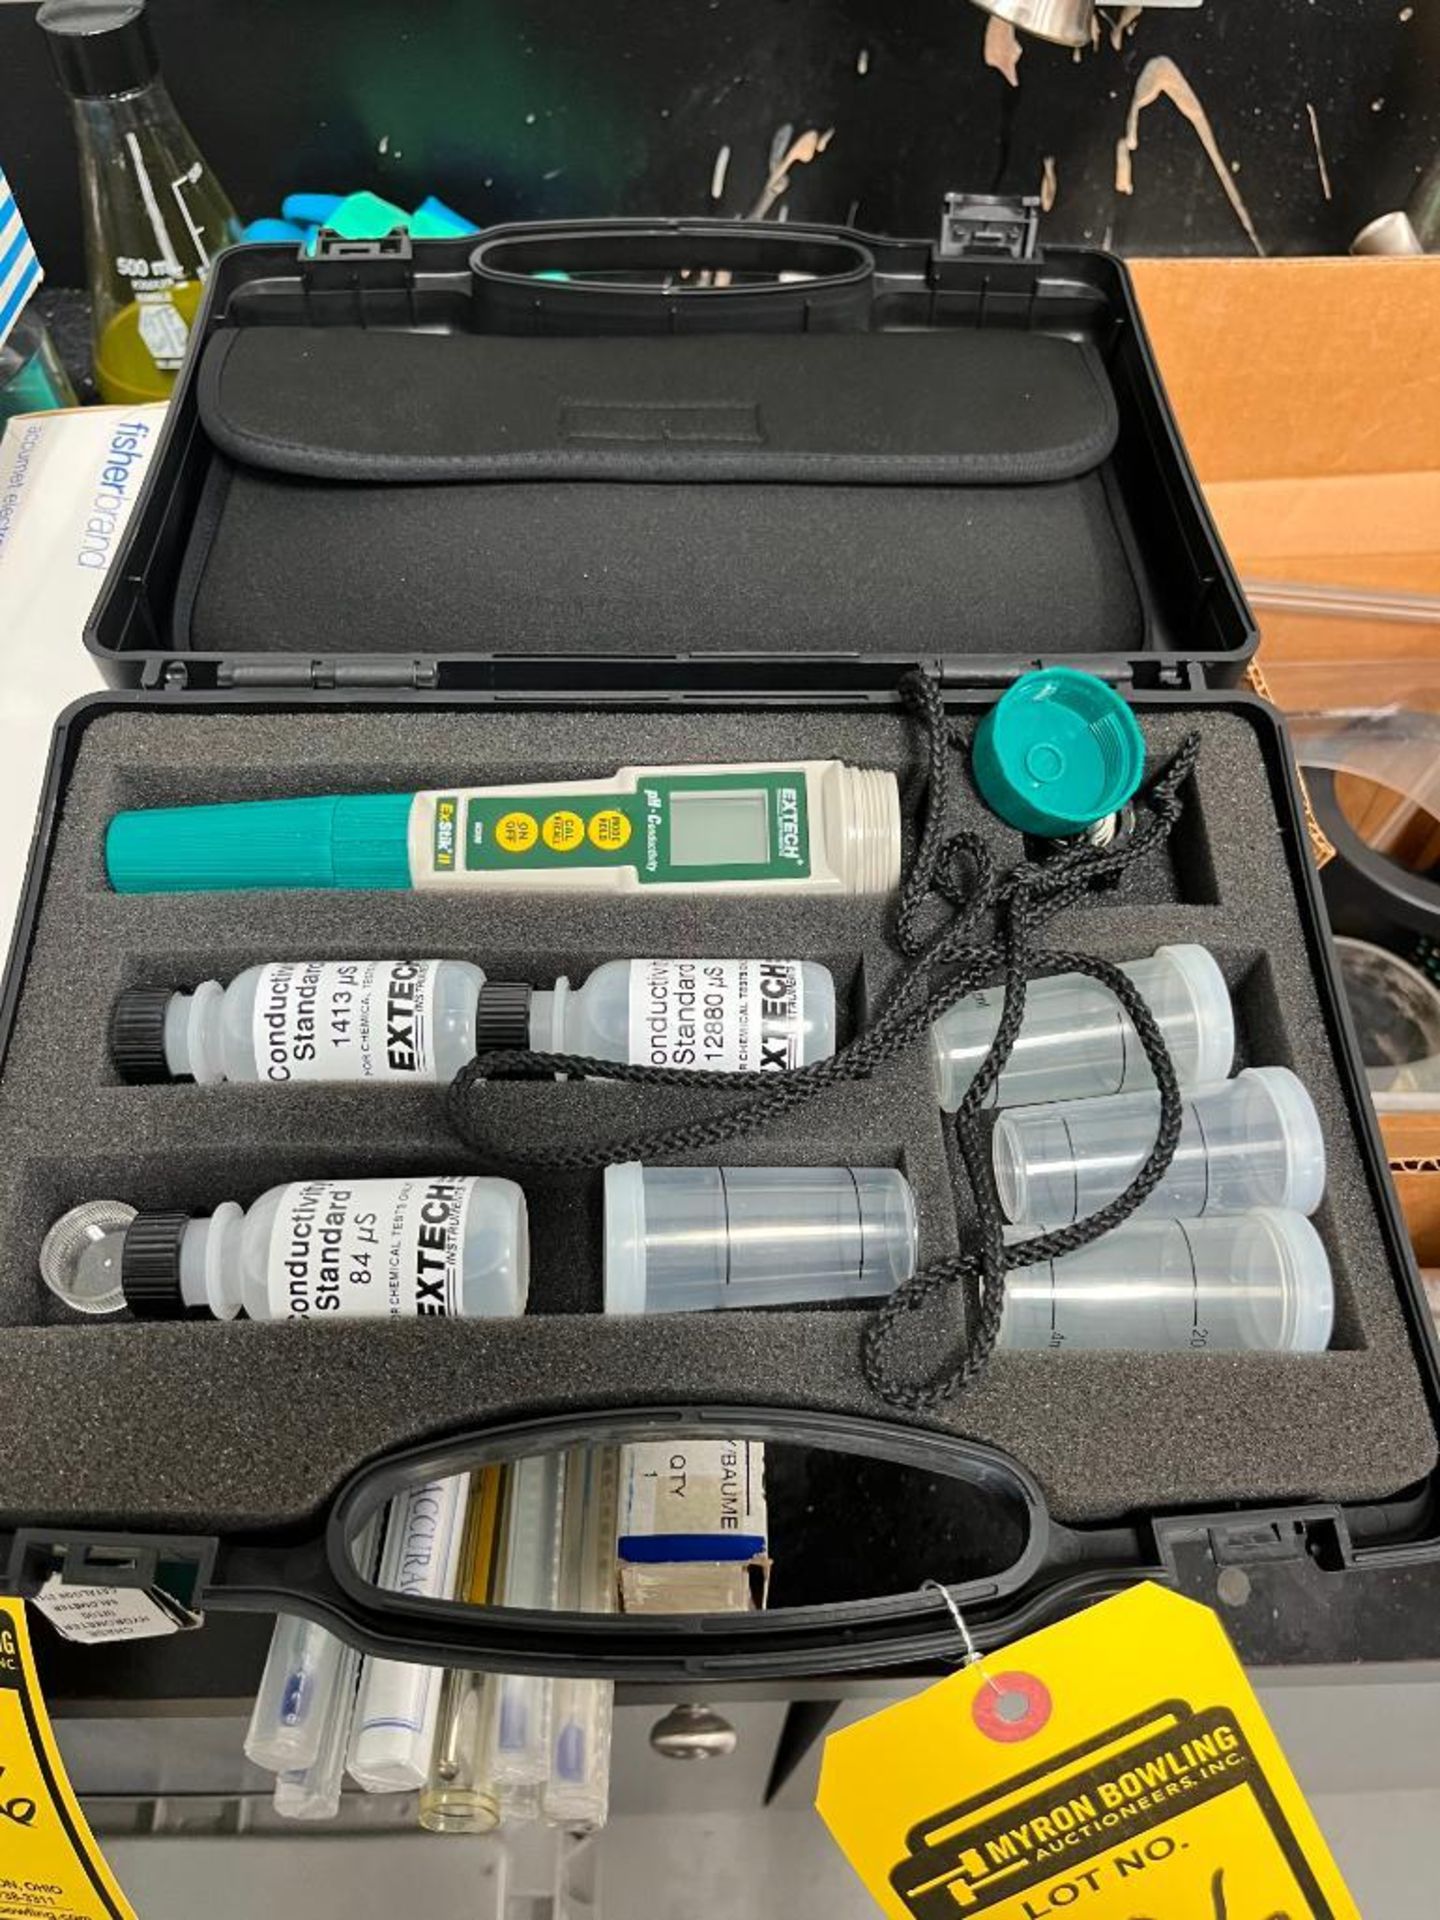 Box of Assorted Ph Meters & Electrodes, Sensidyne Gastec 800 Pump